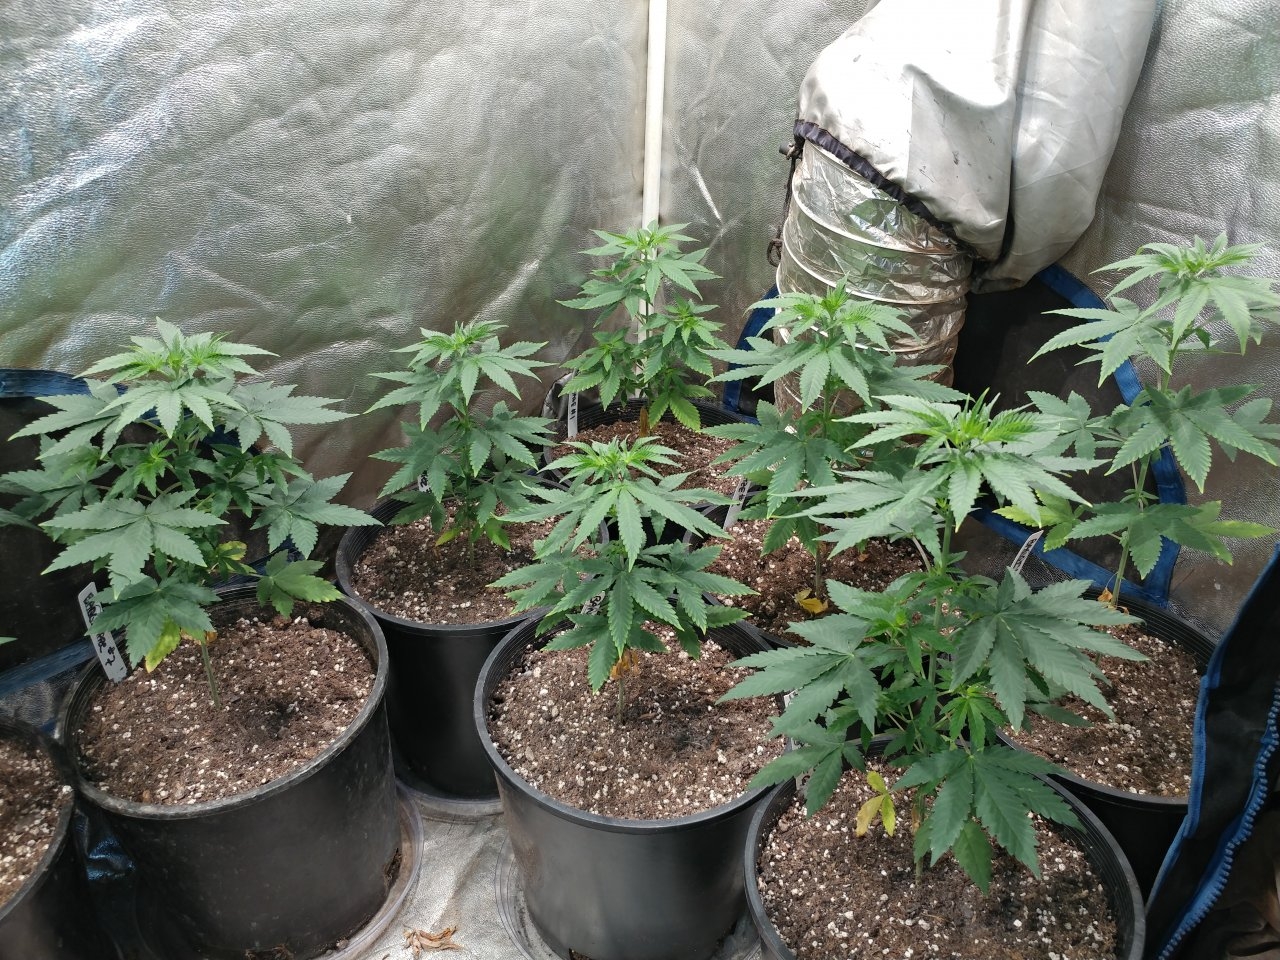 Icemud_Bangi Haze F9_veg_cannabis_seed_led grow light_indoor (4).jpg